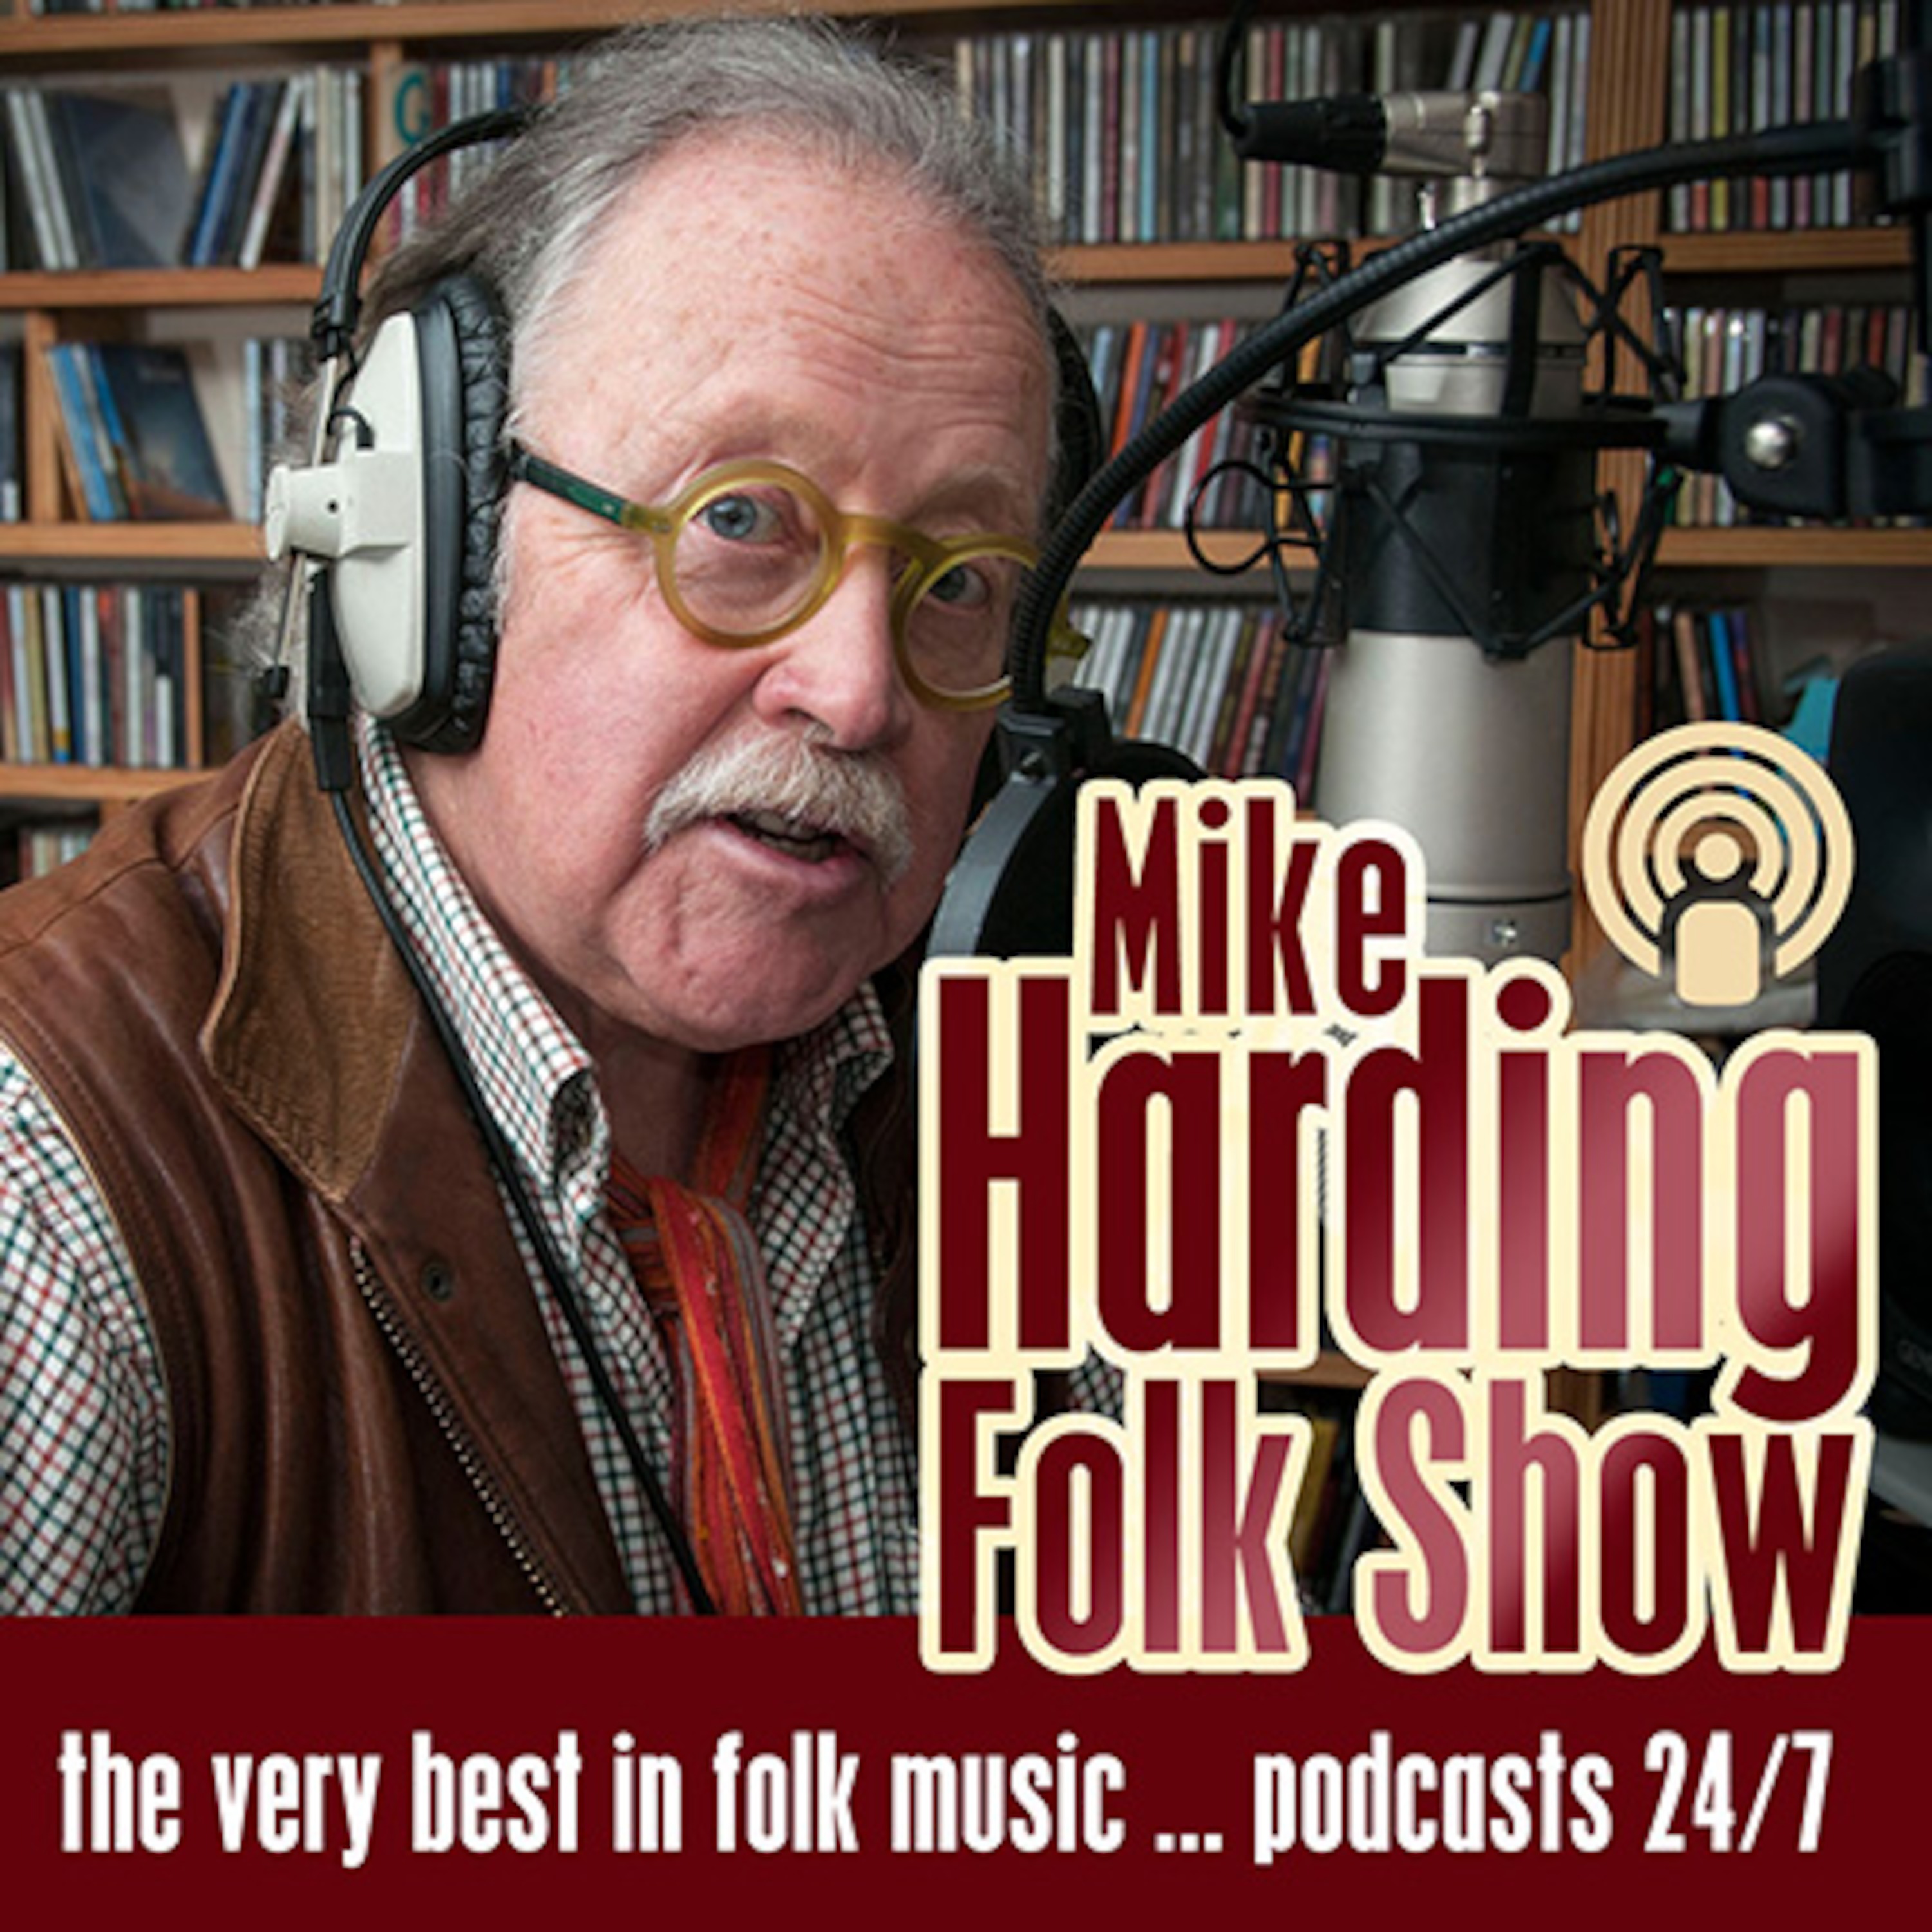 Mike Harding Folk Show 162